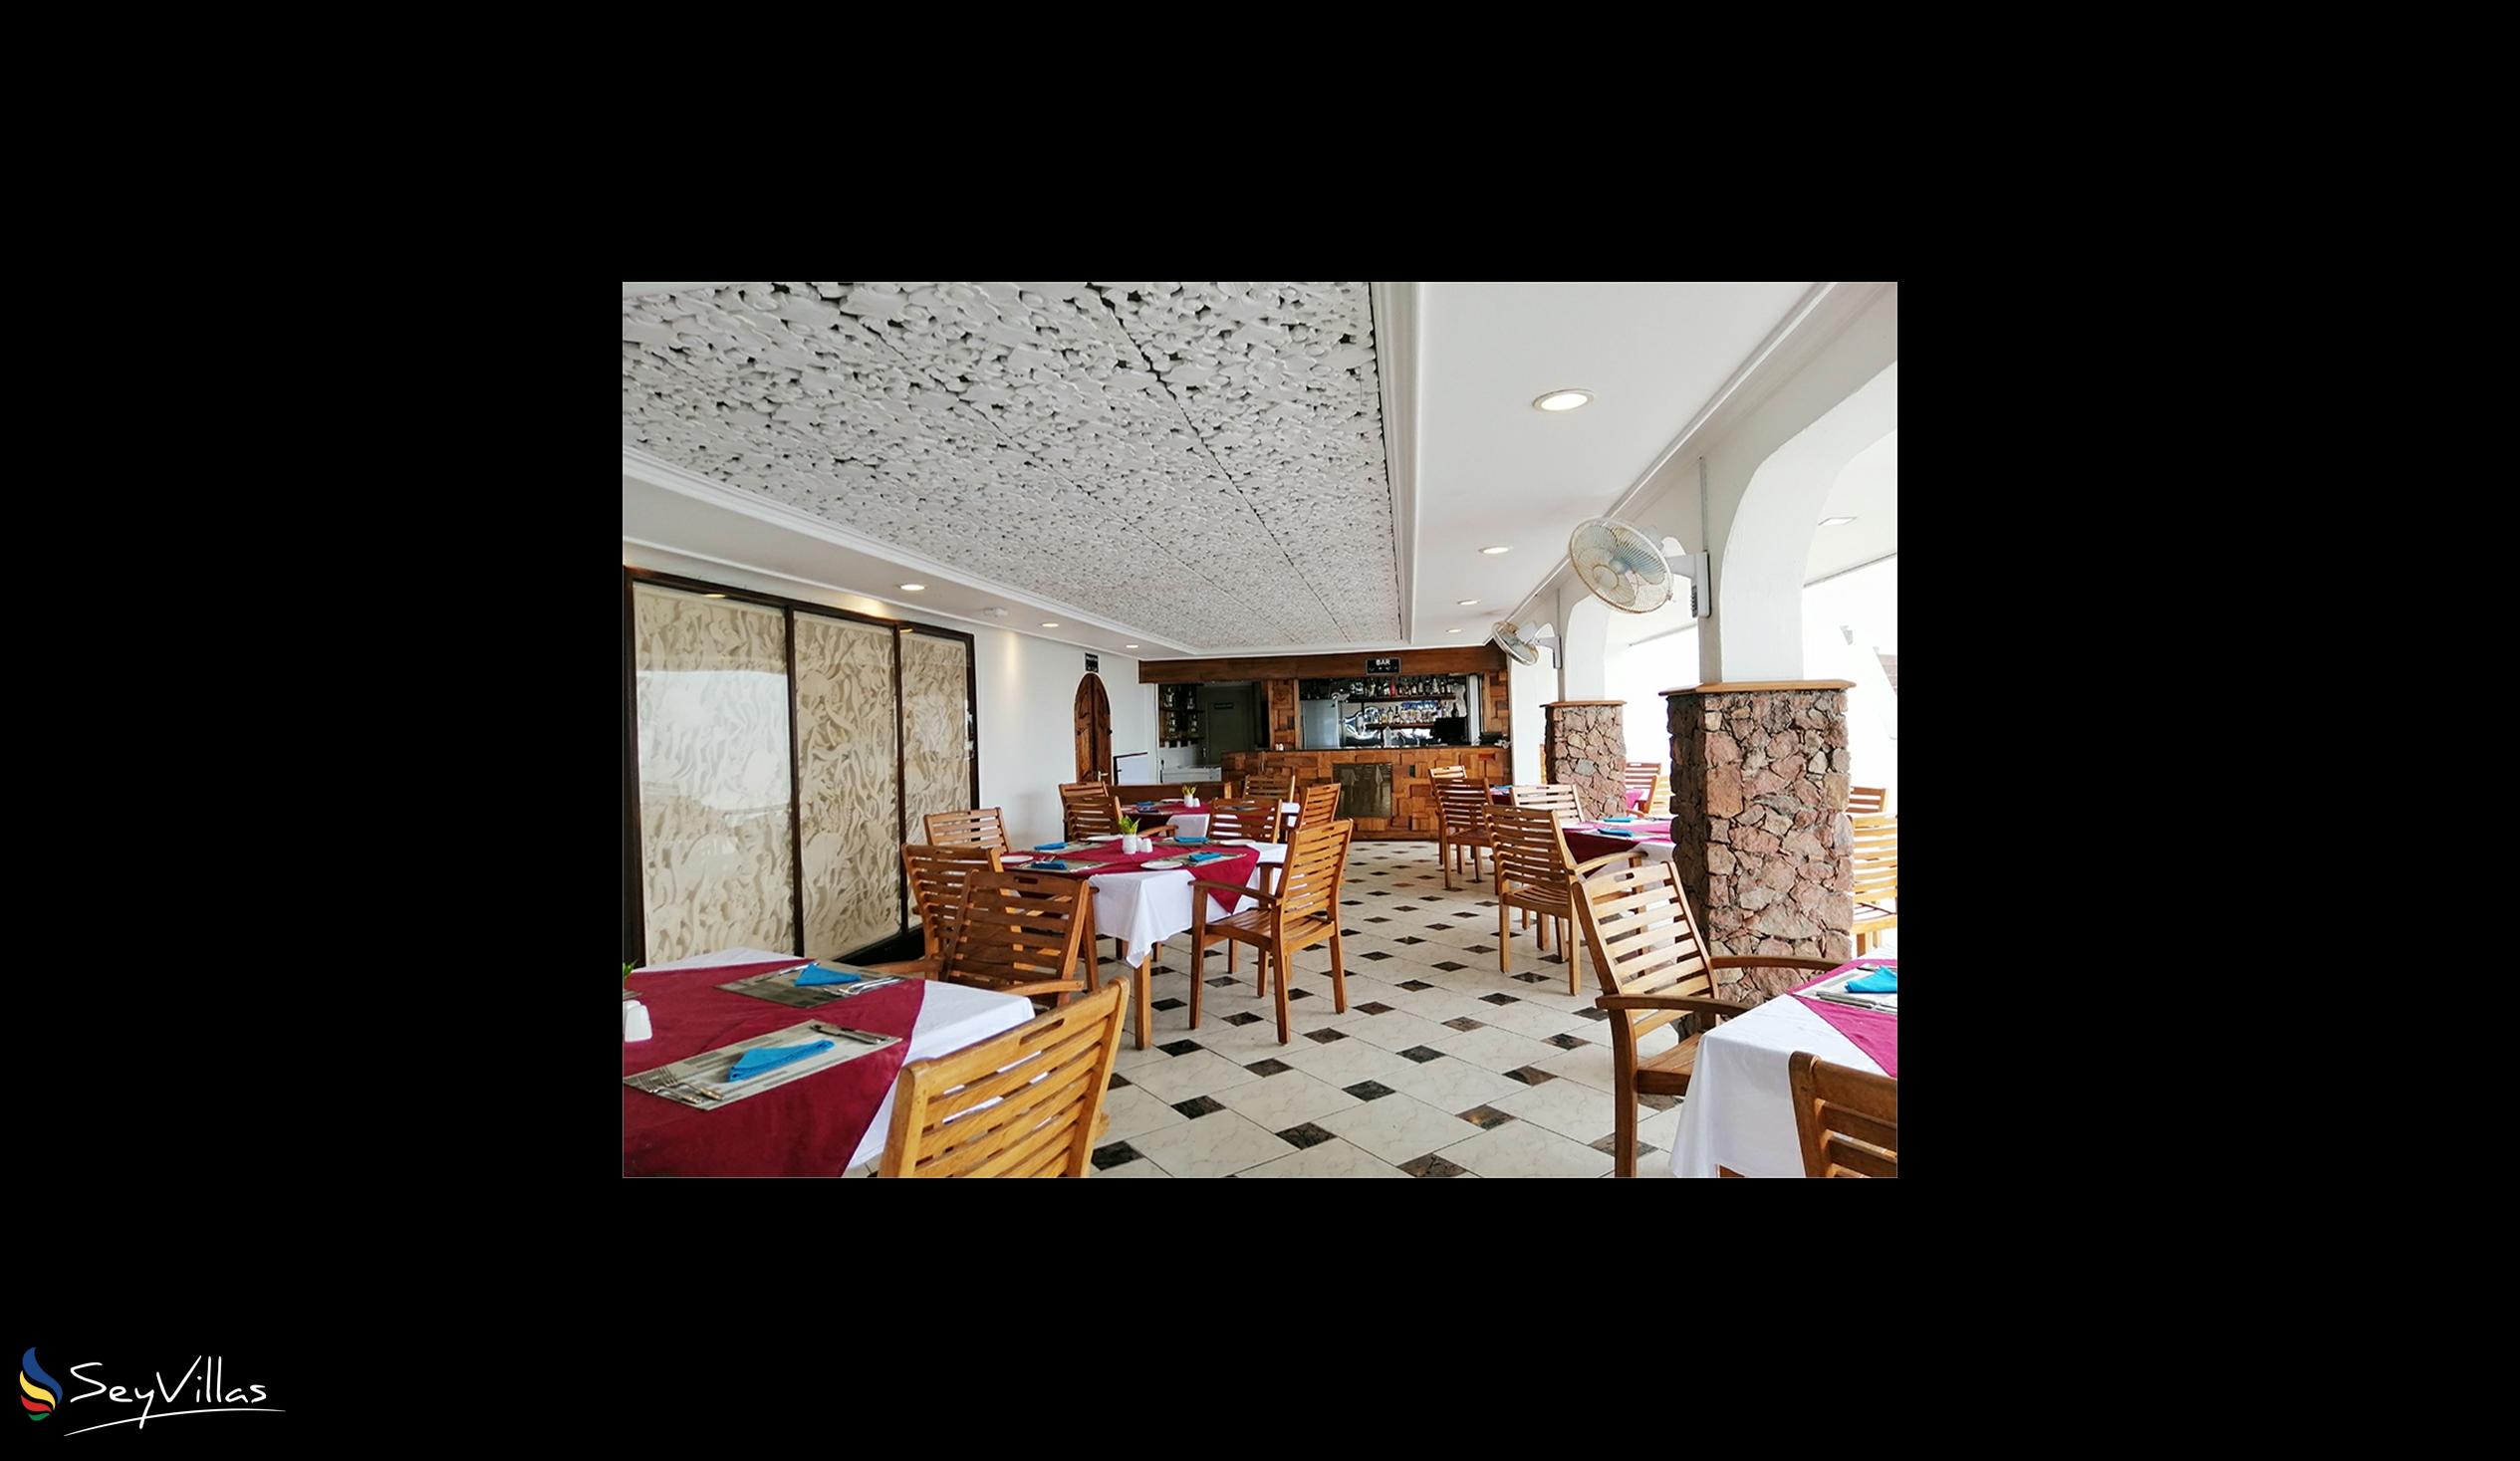 Foto 33: Le Relax Hotel & Restaurant - Innenbereich - Mahé (Seychellen)